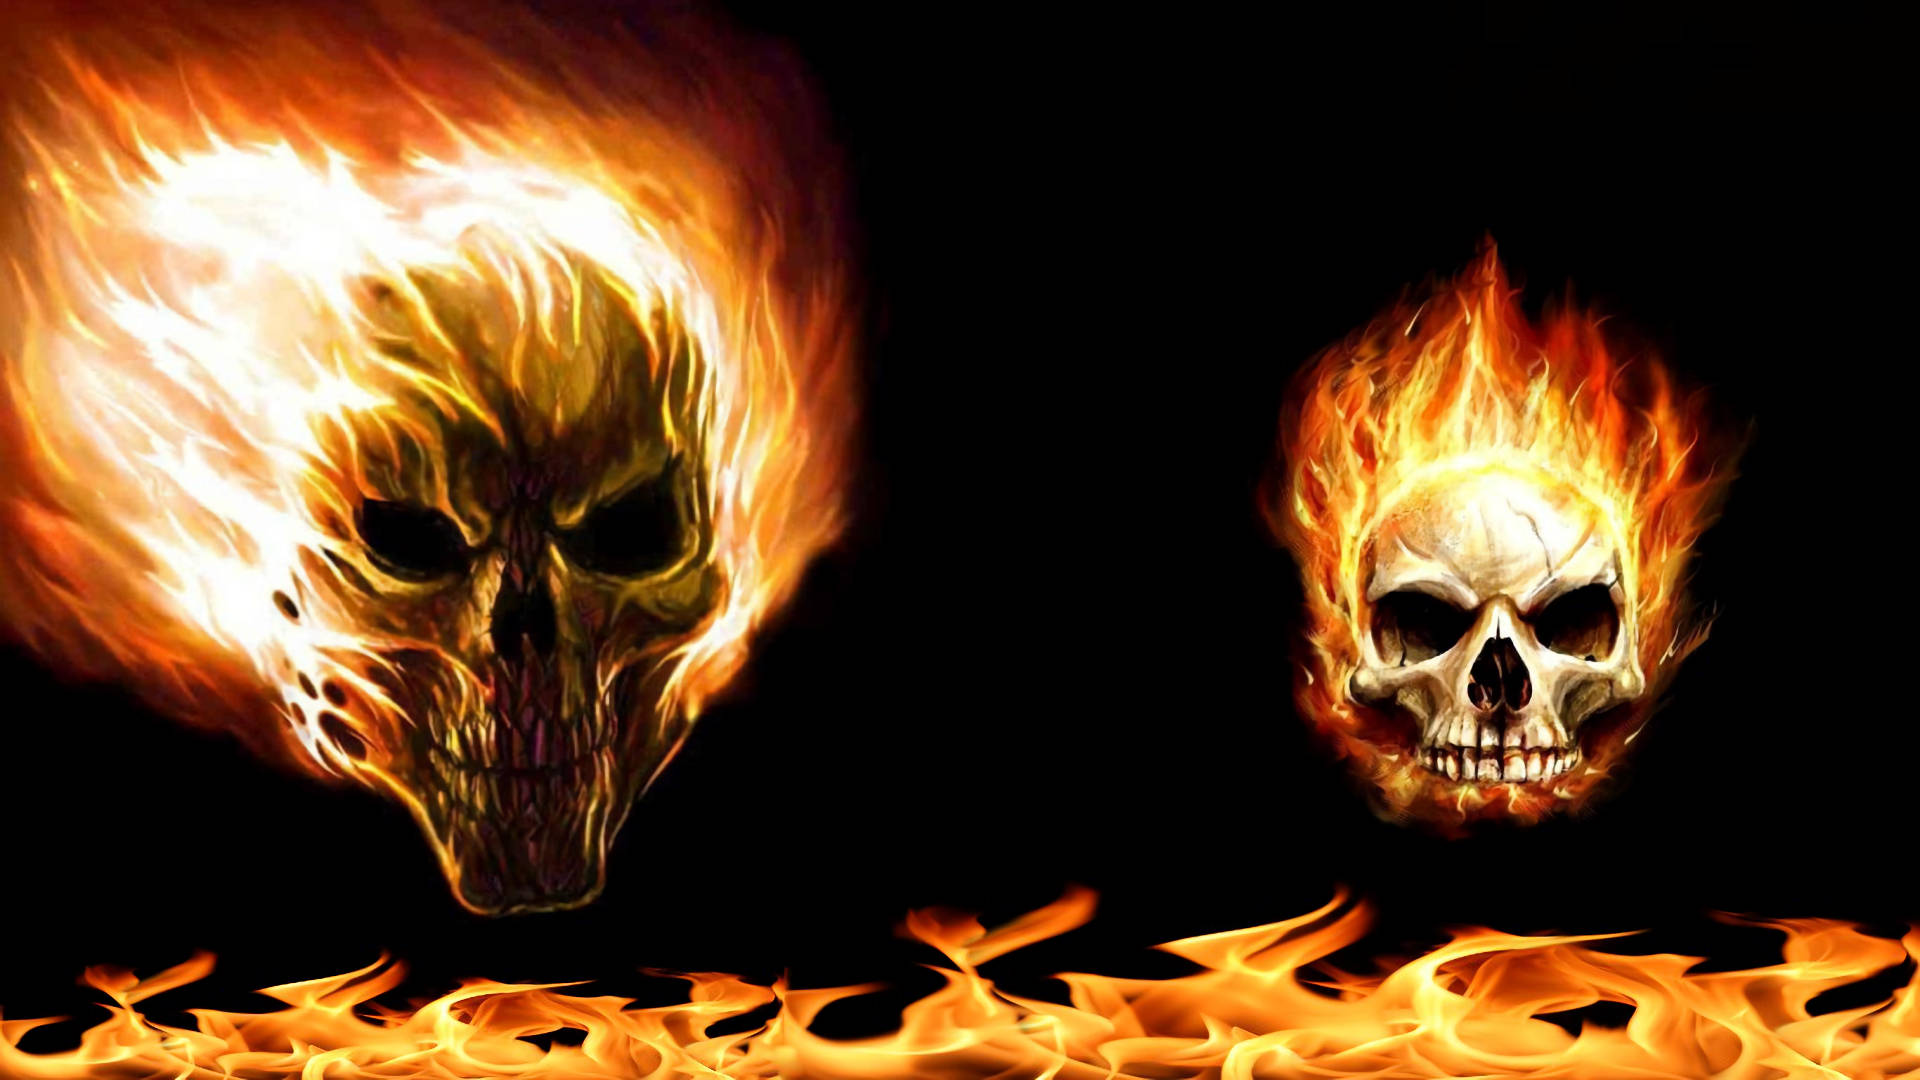 Scary Skulls On Fire Wallpaper